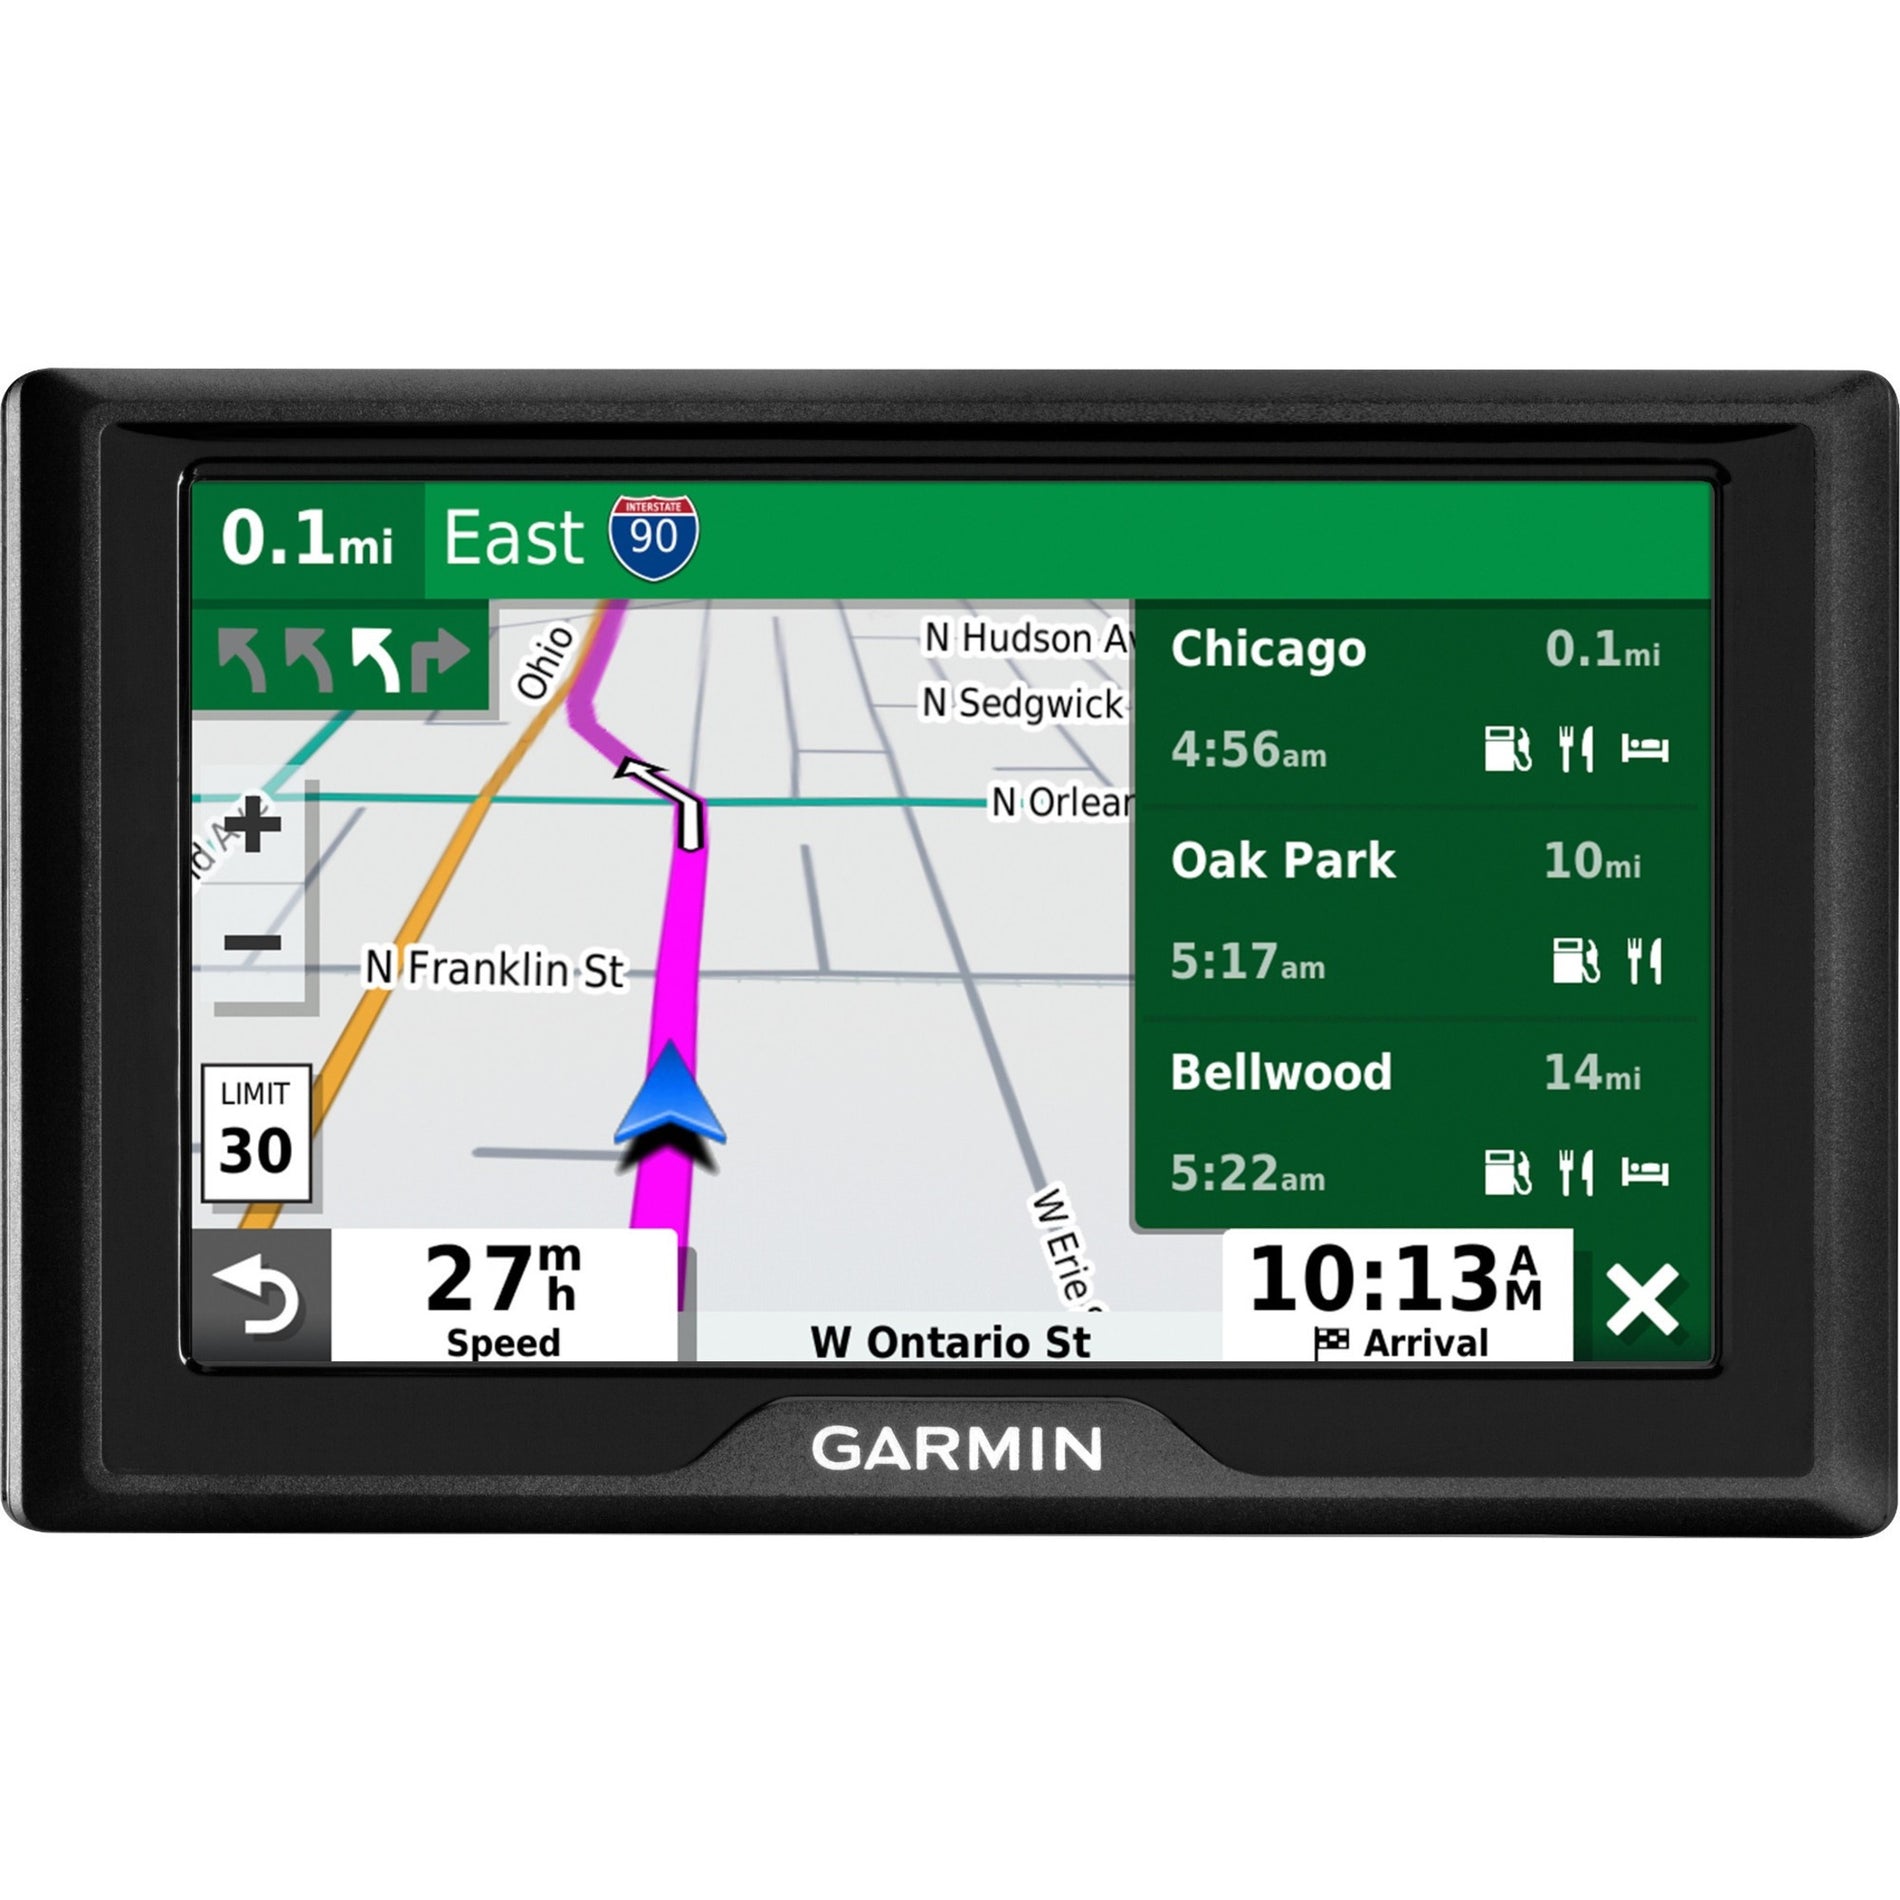 Garmin 010-02036-07 Drive 52 Automobile Portable GPS Navigator, 5" Touchscreen, Preloaded Maps